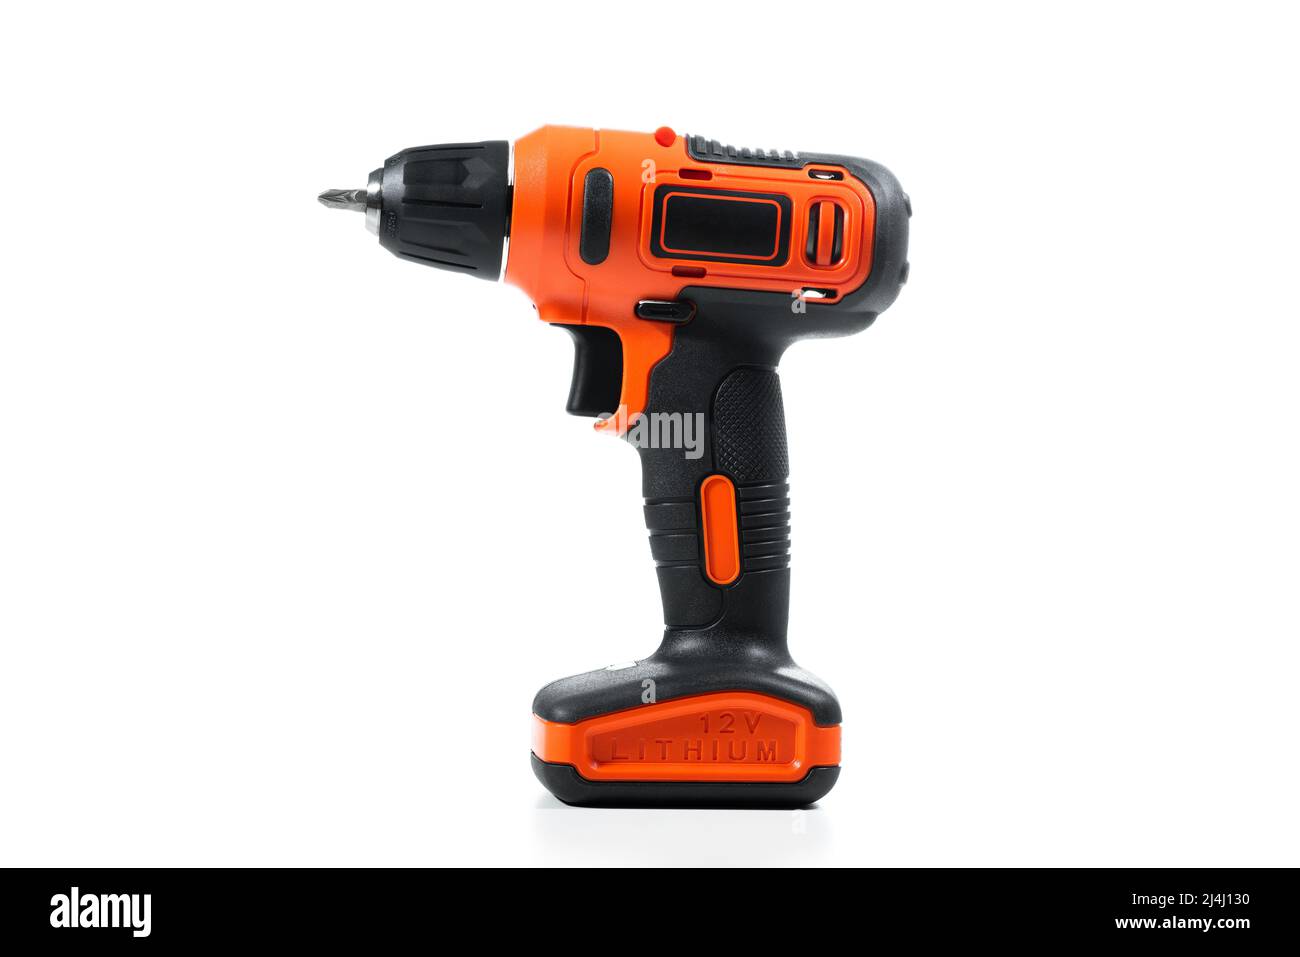 https://c8.alamy.com/comp/2J4J130/black-orange-cordless-screwdriver-drill-over-white-background-2J4J130.jpg